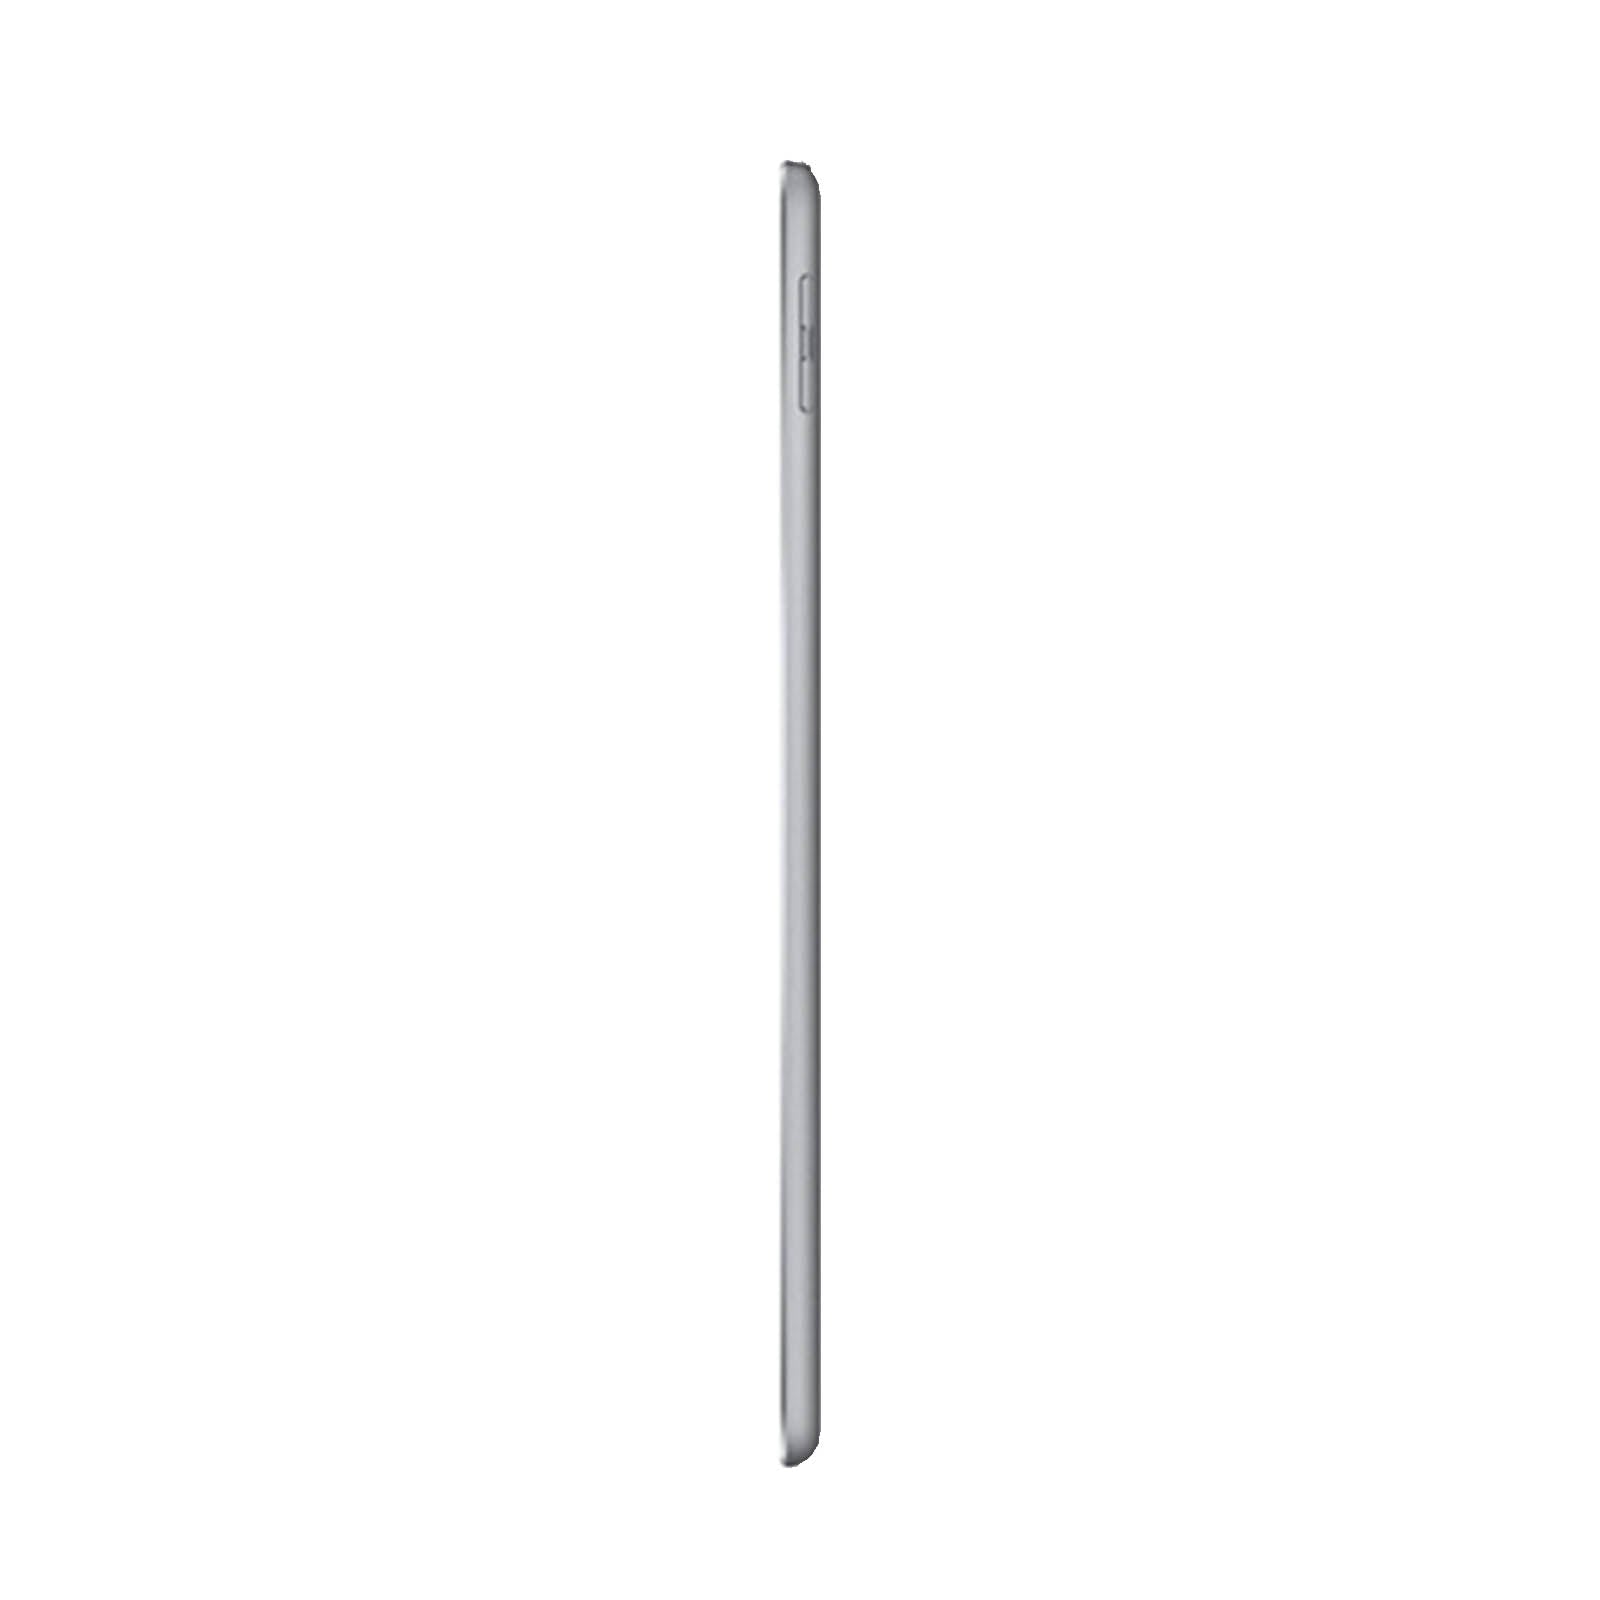 Apple iPad 4 64GB Nero WiFi Buono